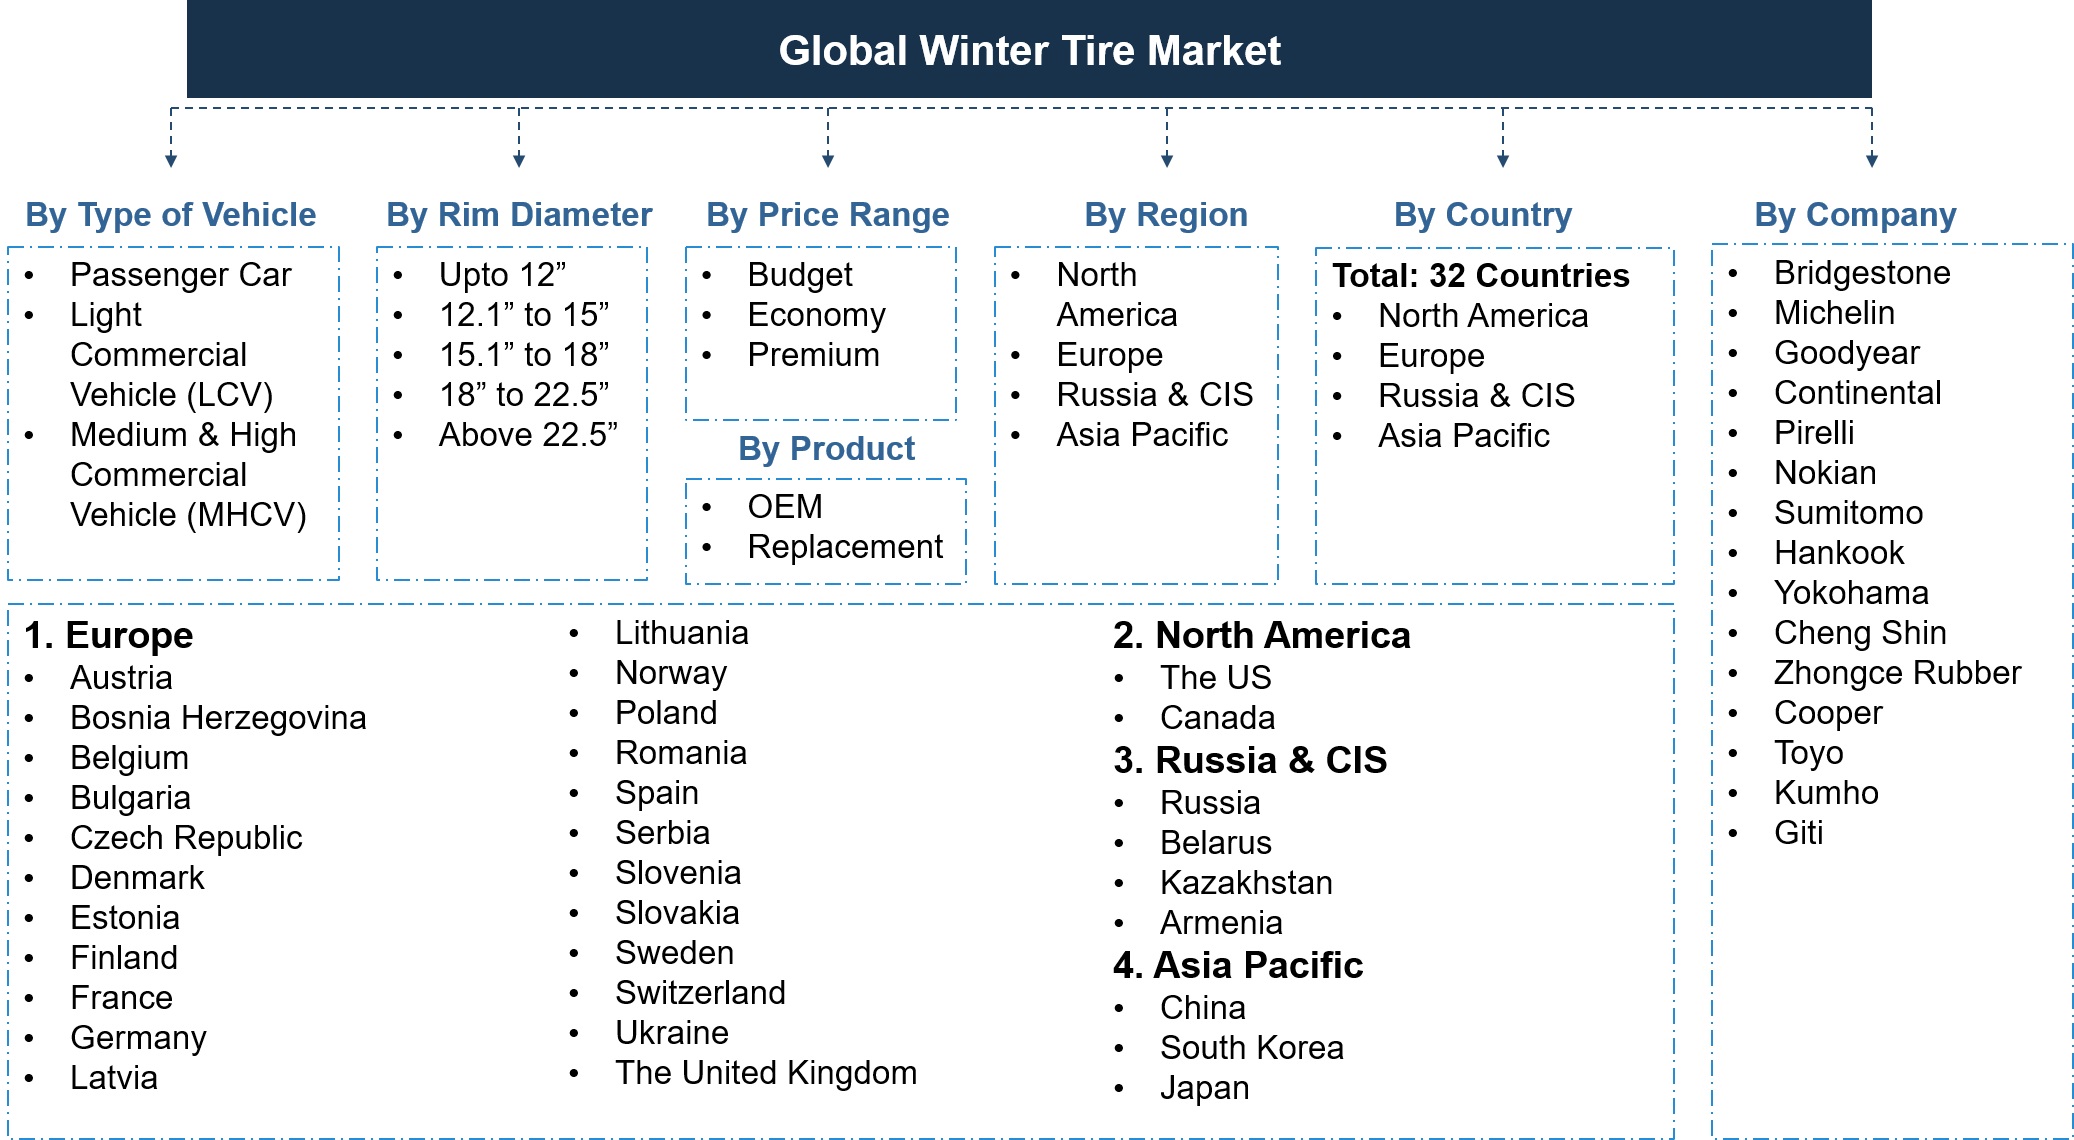 Global Winter Tire Market Segmentation